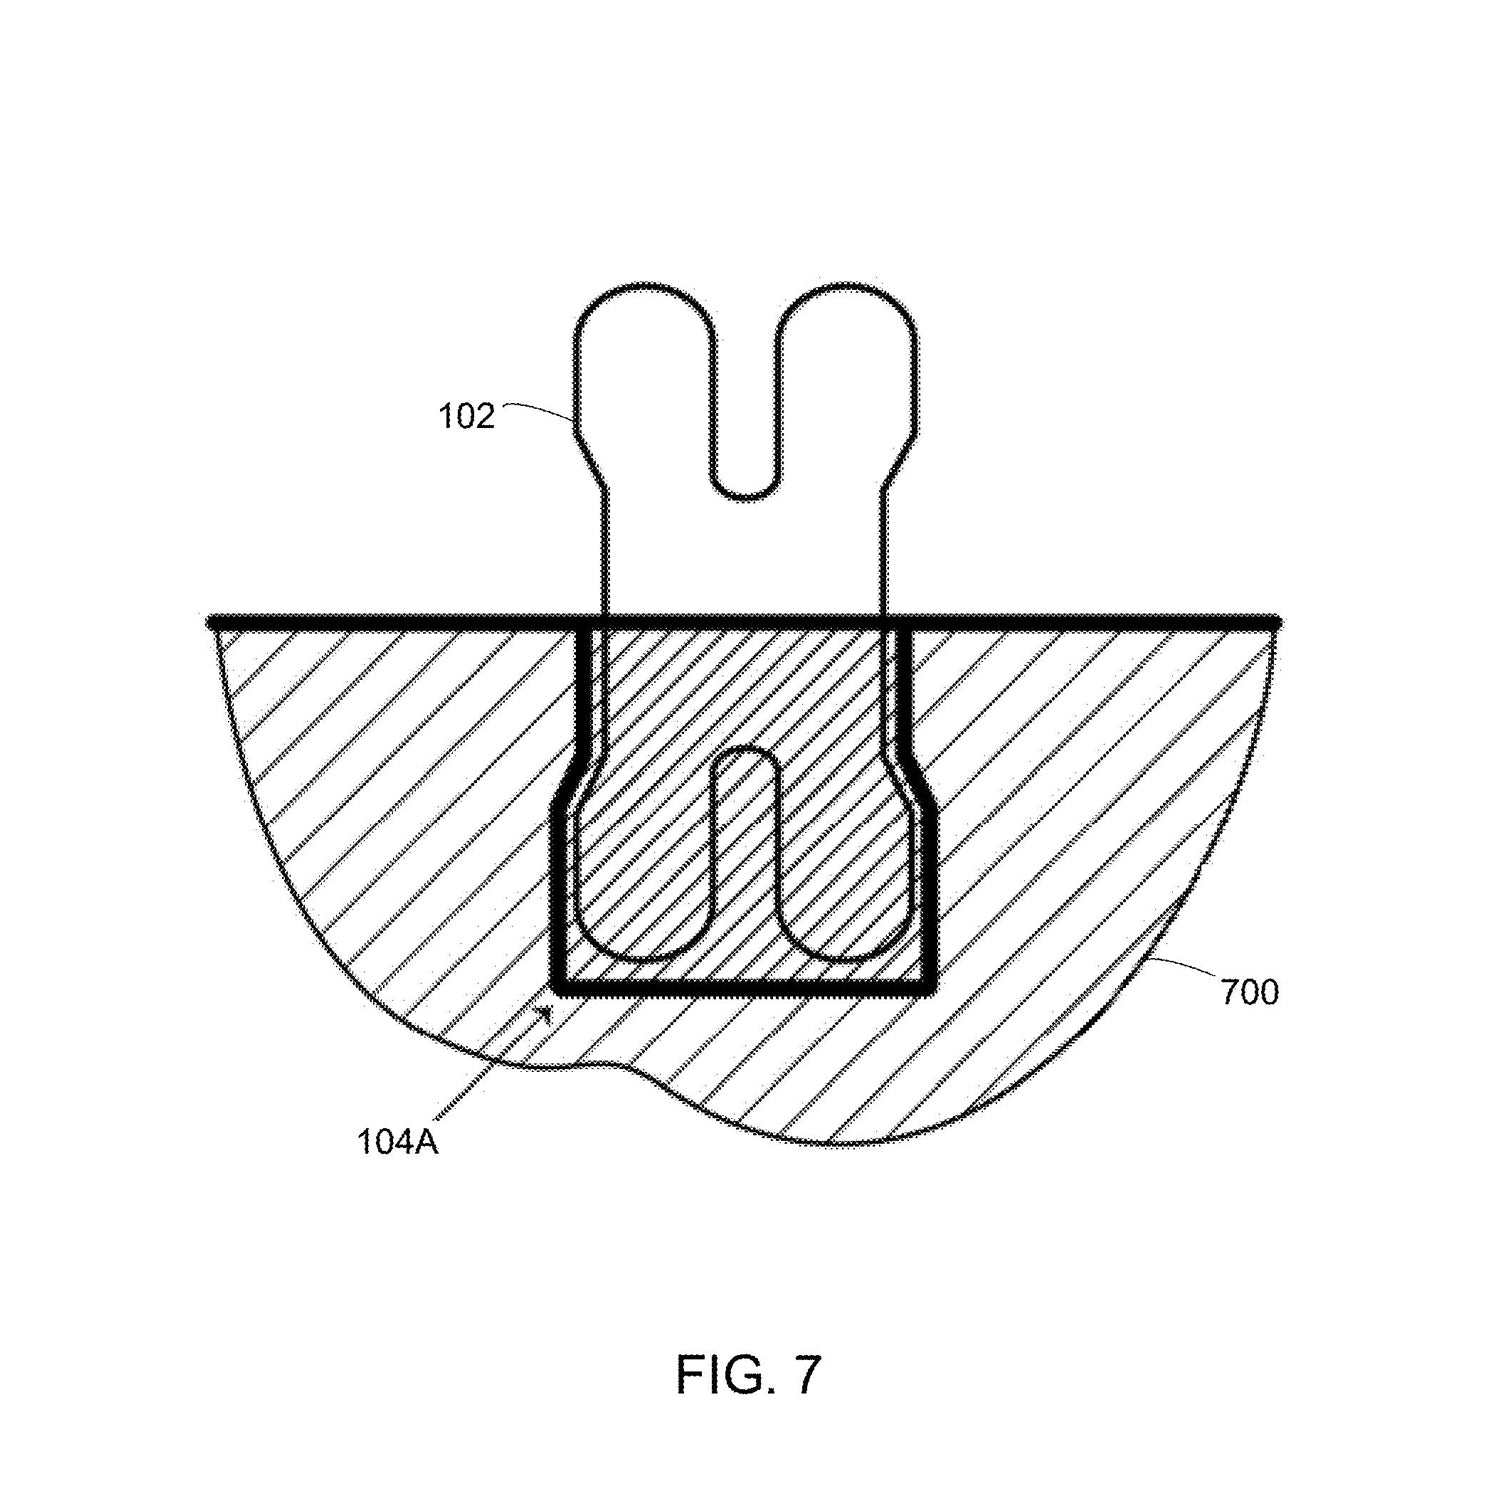 3D Printing Patent Illustration - Pin System